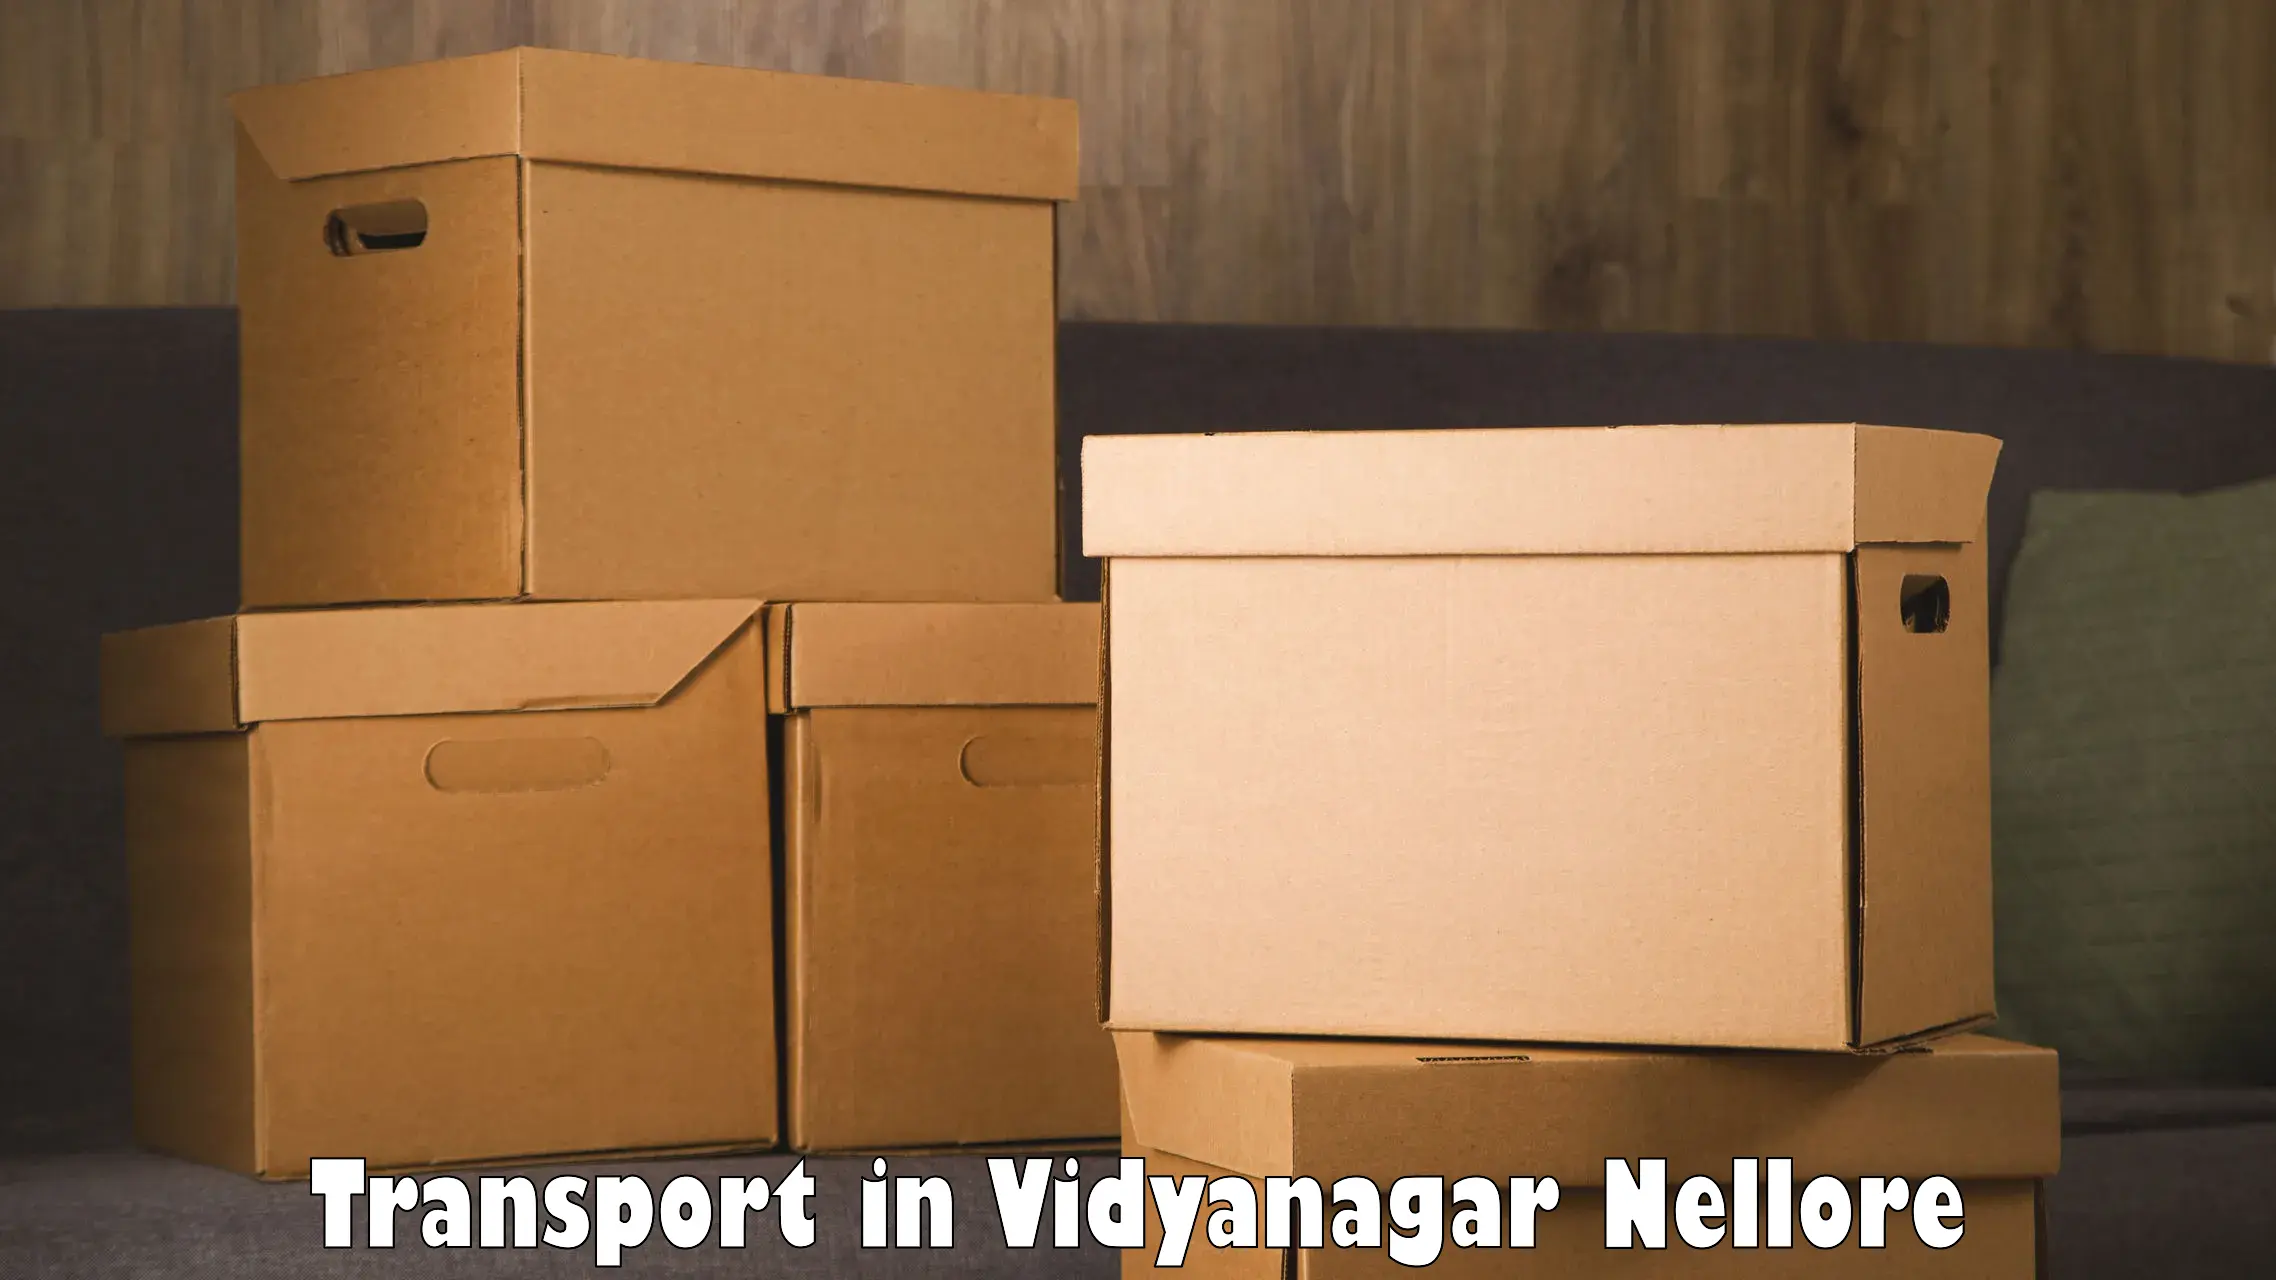 Lorry transport service in Vidyanagar Nellore